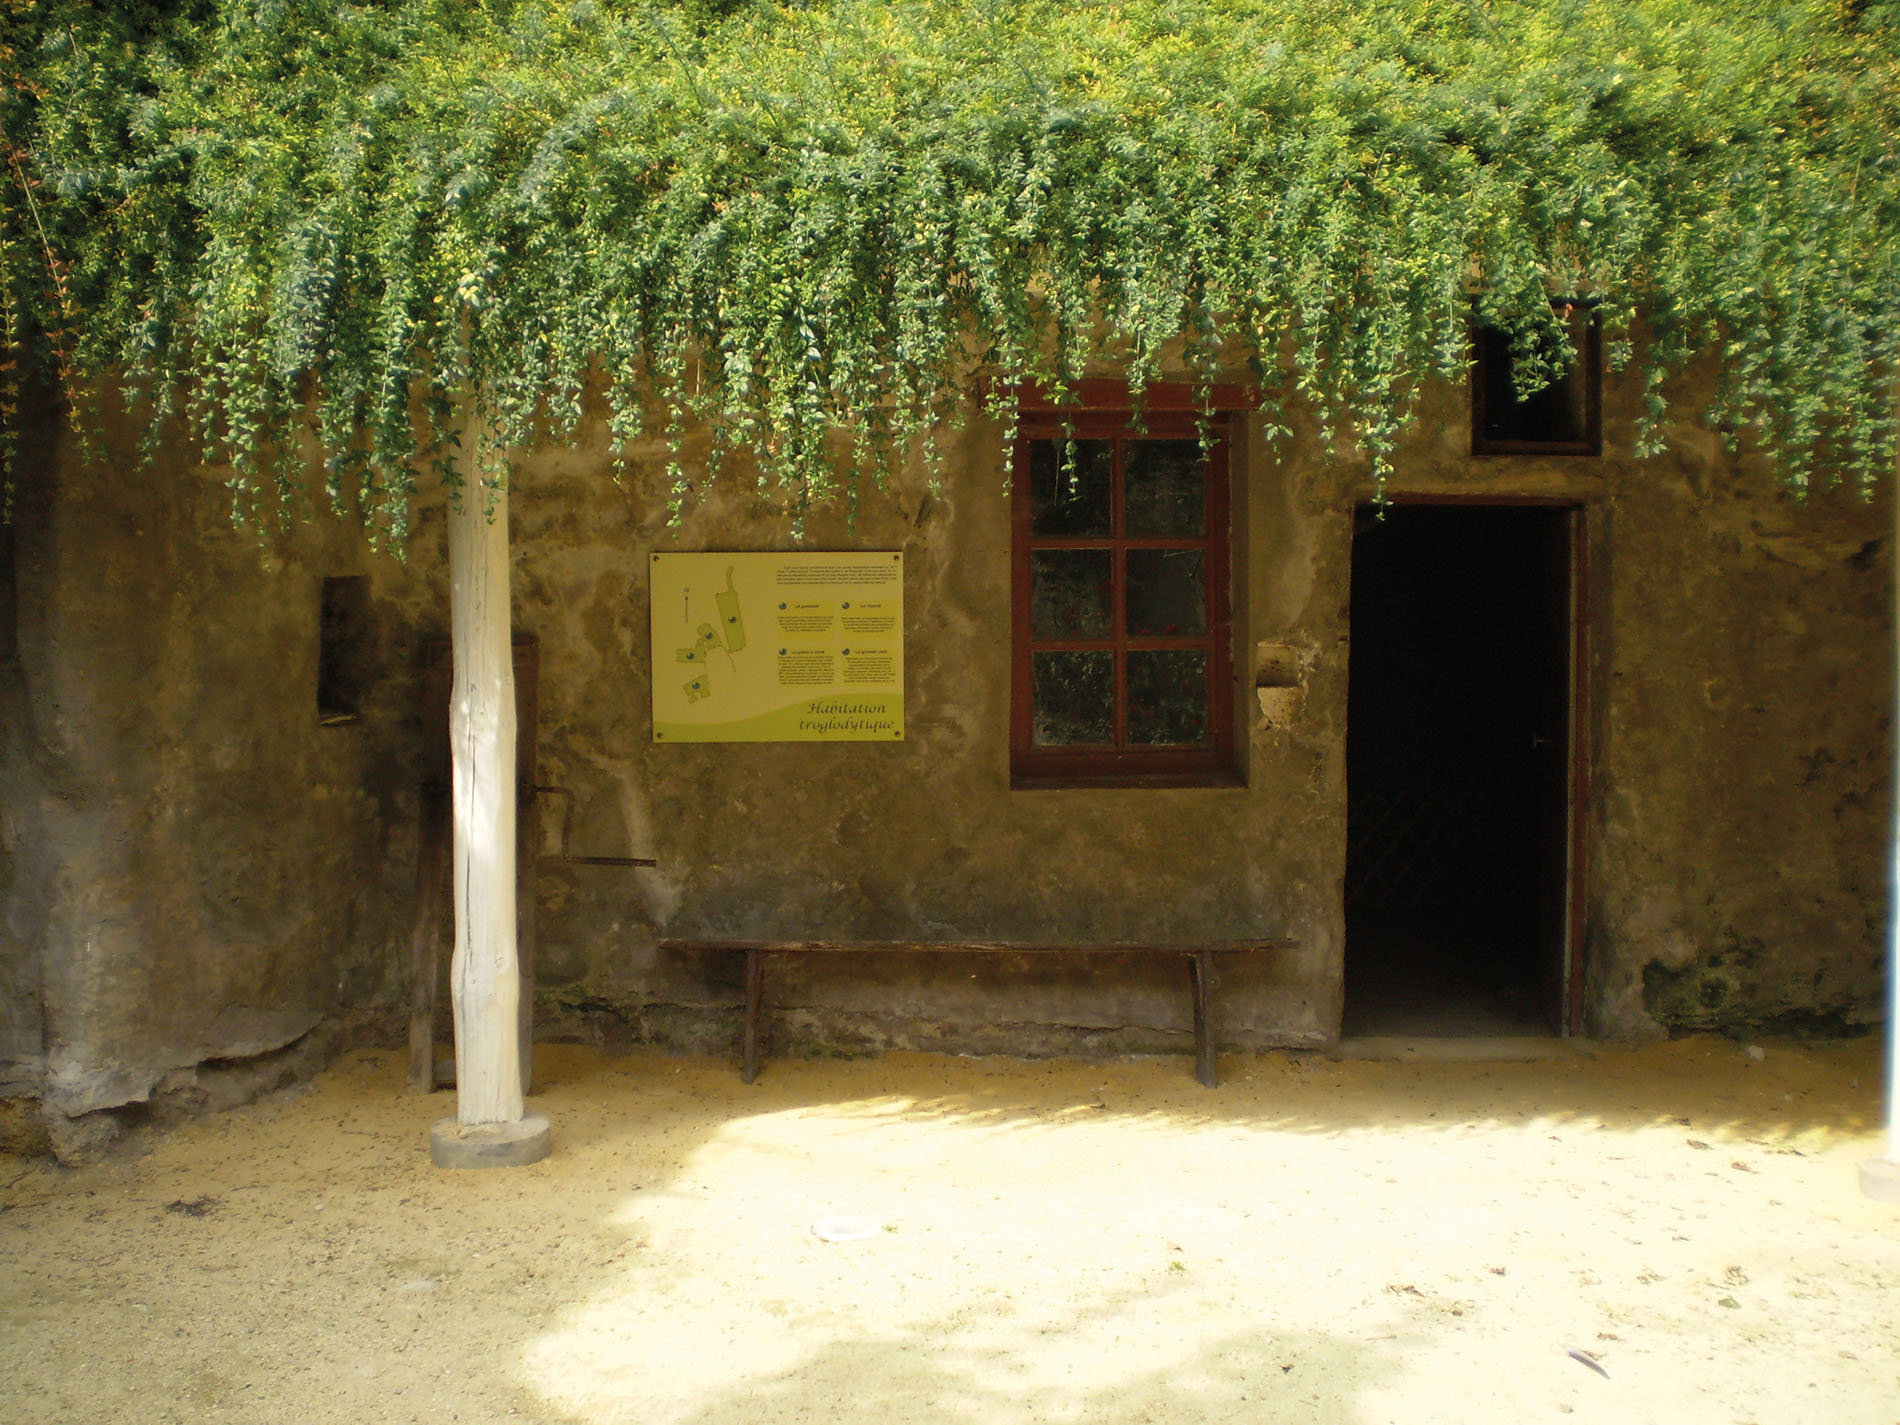 Troglodyte cellars : Visit Troglodyte cellars from DouÃ©-la-Fontaine